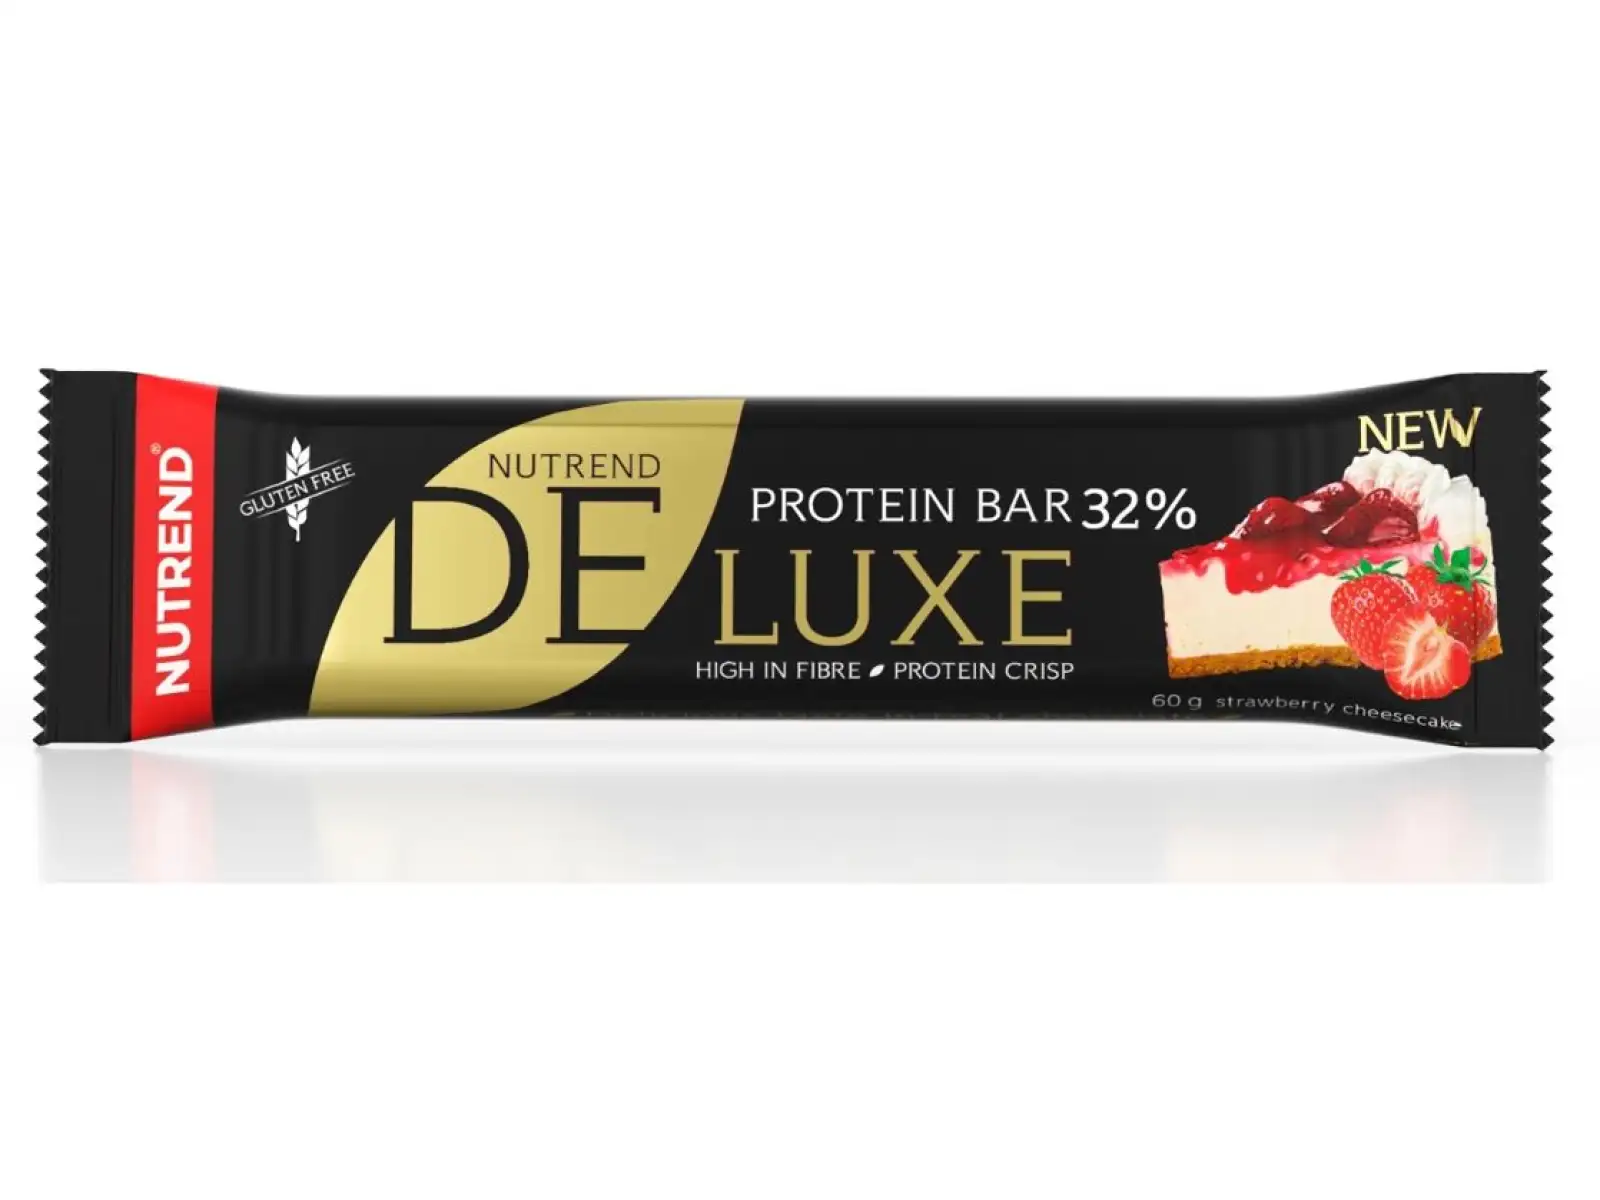 Nutrend Deluxe Protein Bar tyčinka 60g jahodový cheesecake